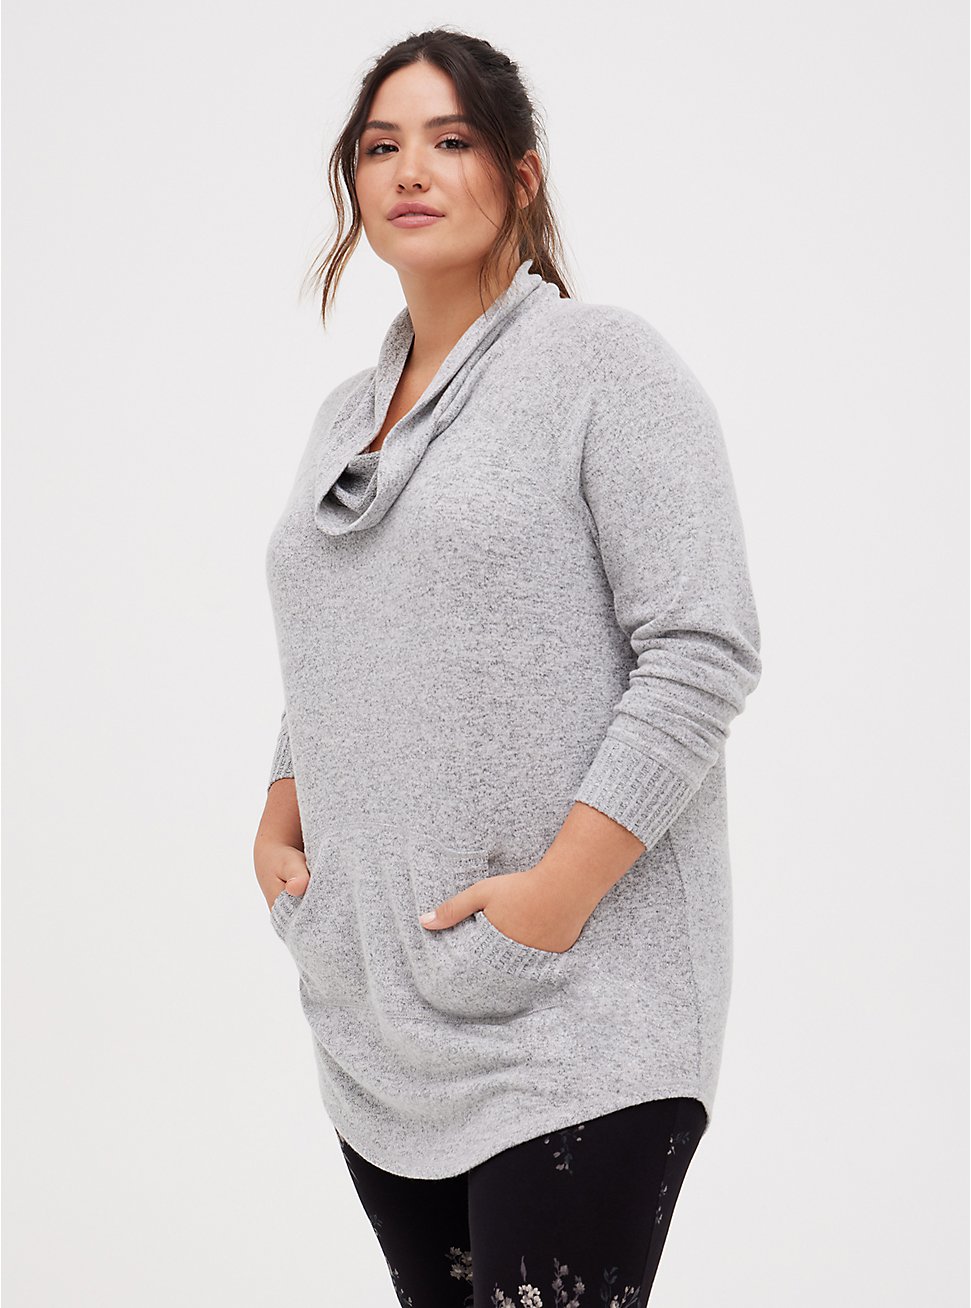 Cowl Neck Tunic Sweatshirt - Super Soft Plush Light Grey , HEATHER GREY, hi-res